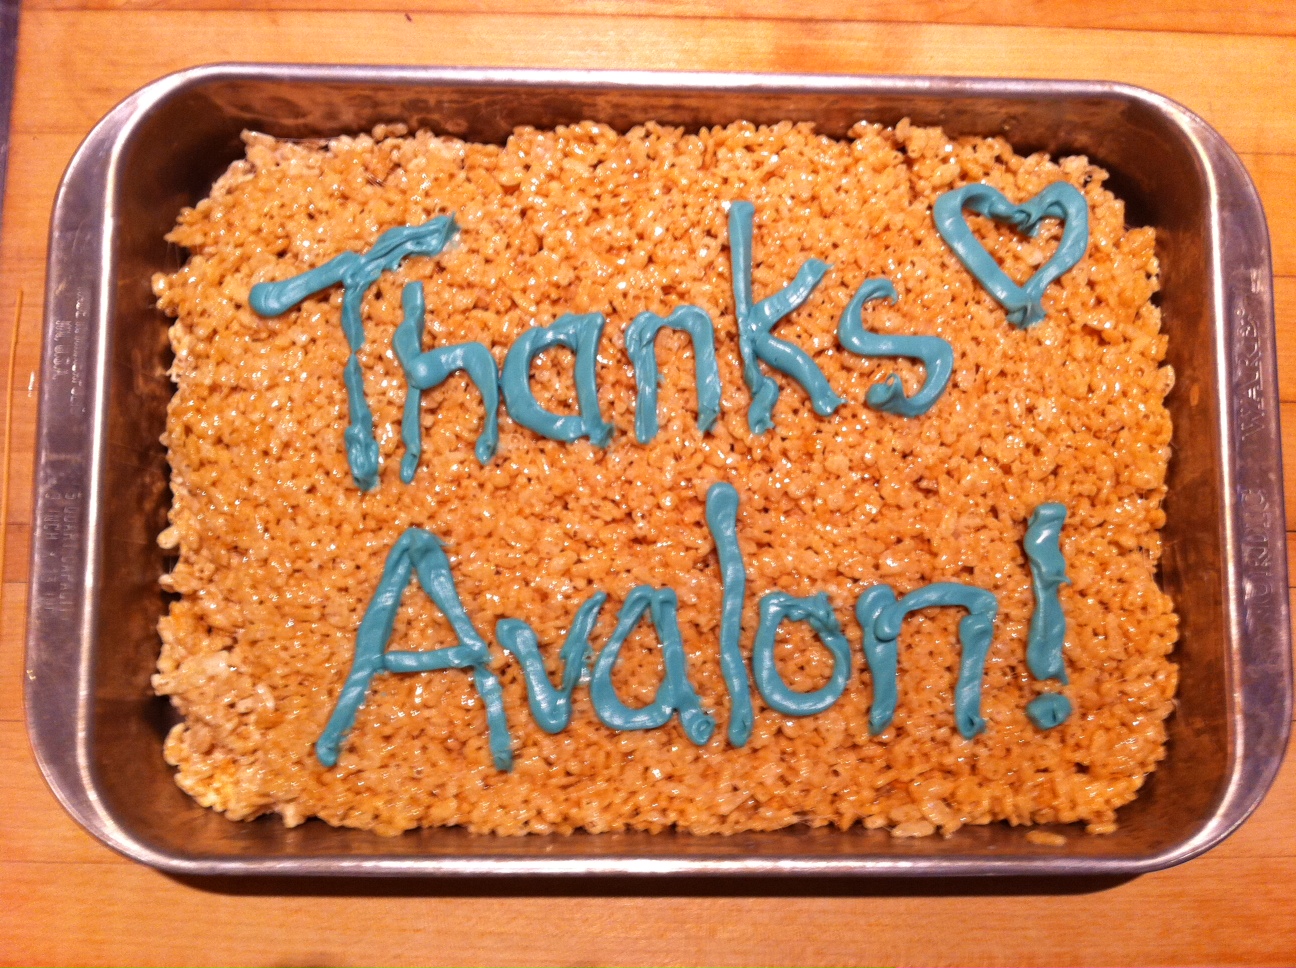 Thanks, Avalon!